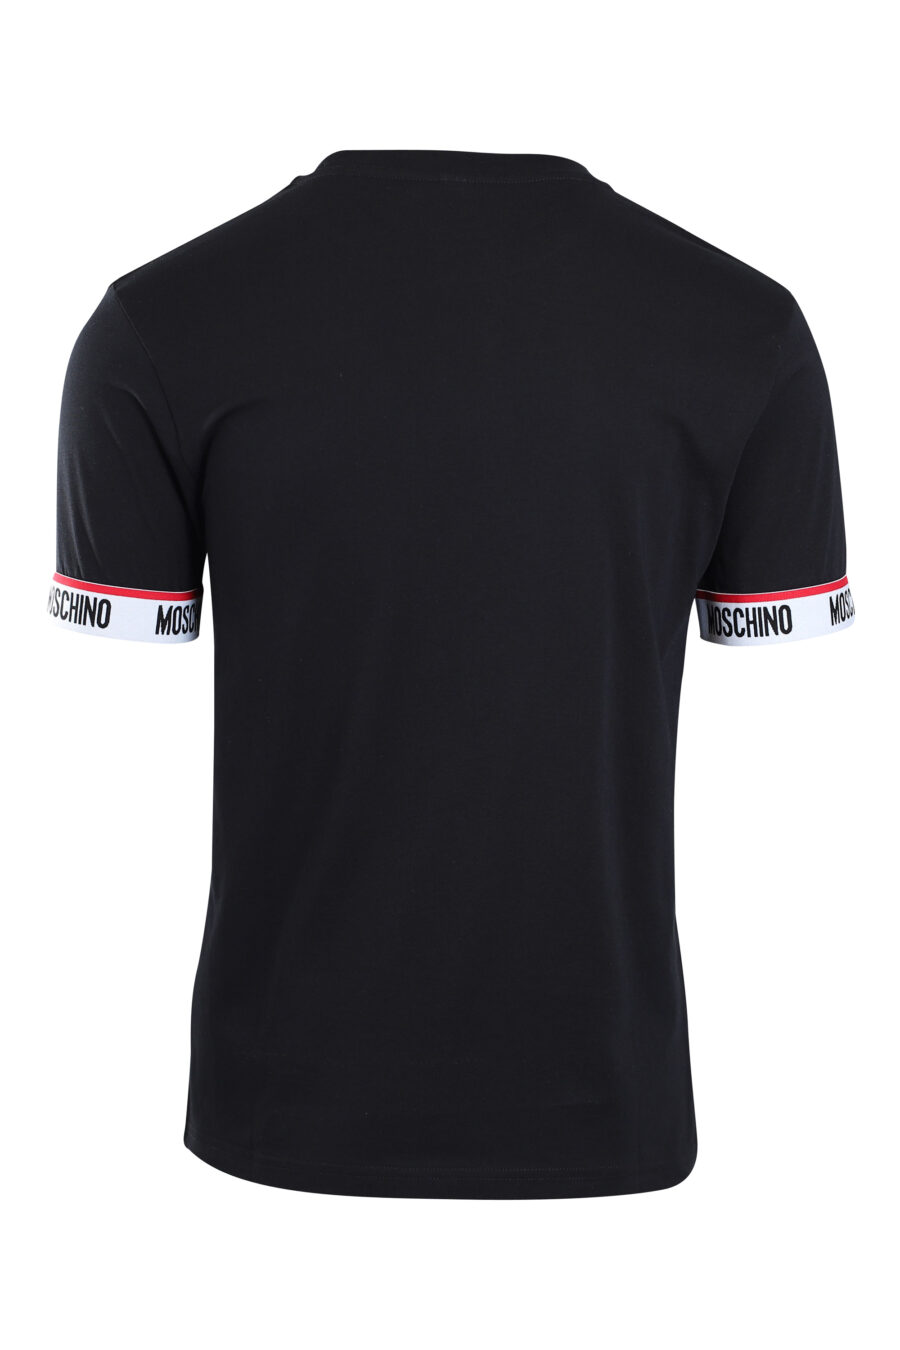 Black T-shirt with logo band on sleeves and monochrome mini-logo - IMG 2158